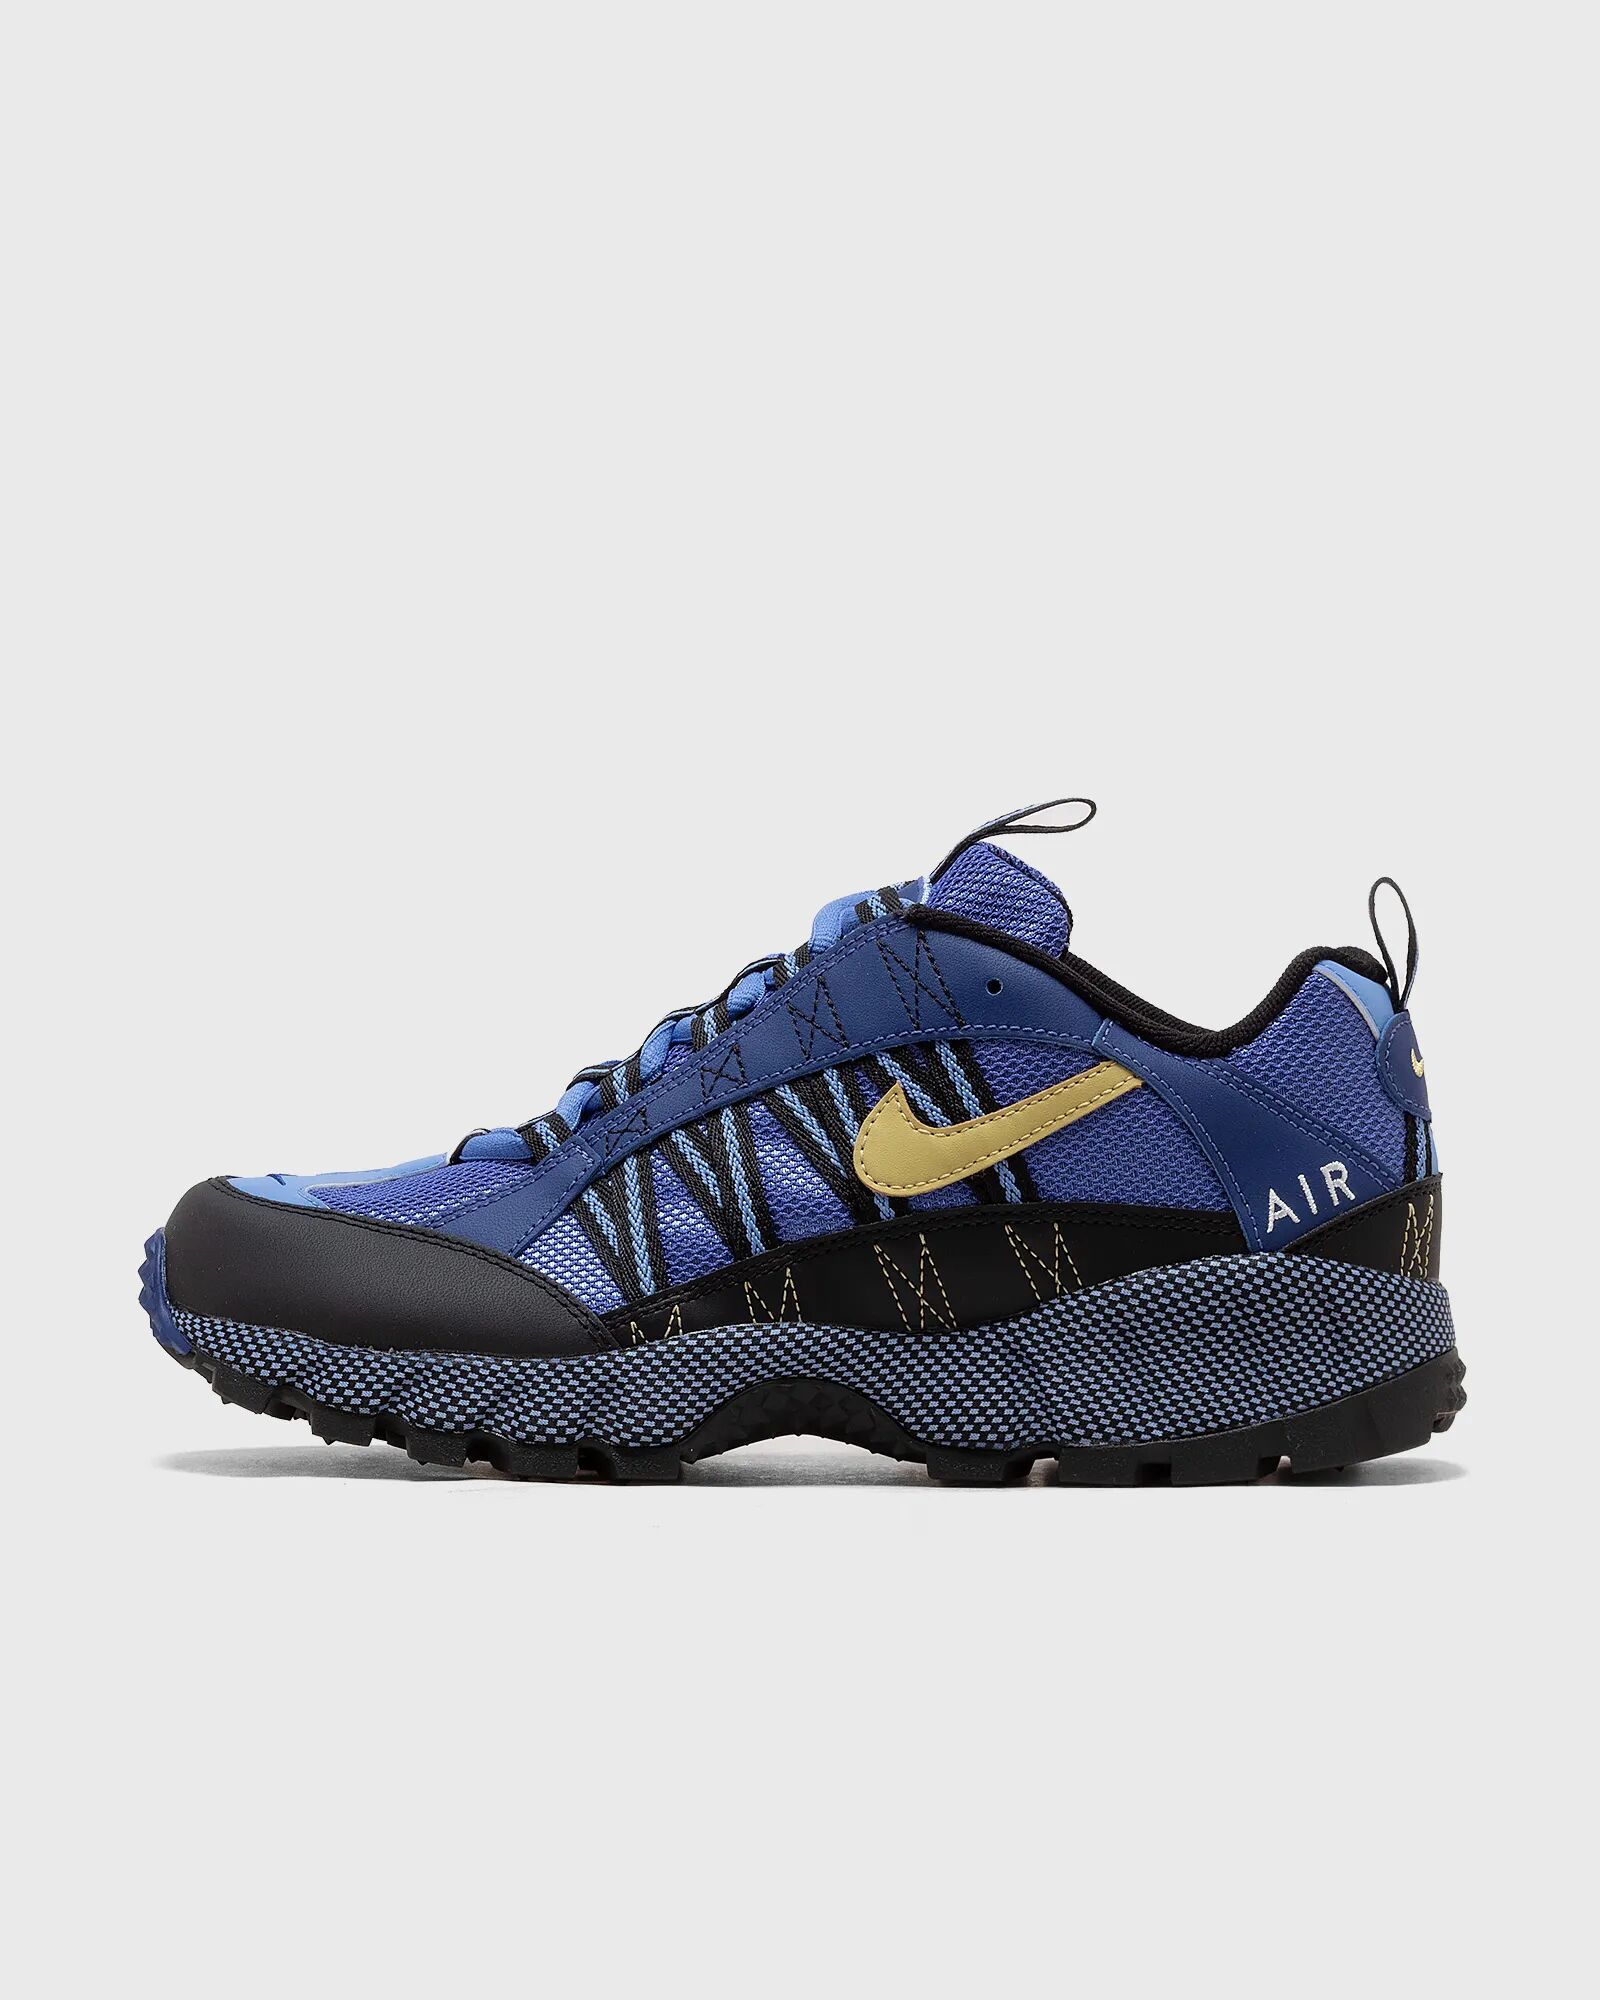 Nike Air Humara Men's Shoes men Lowtop blue purple in taglia:42